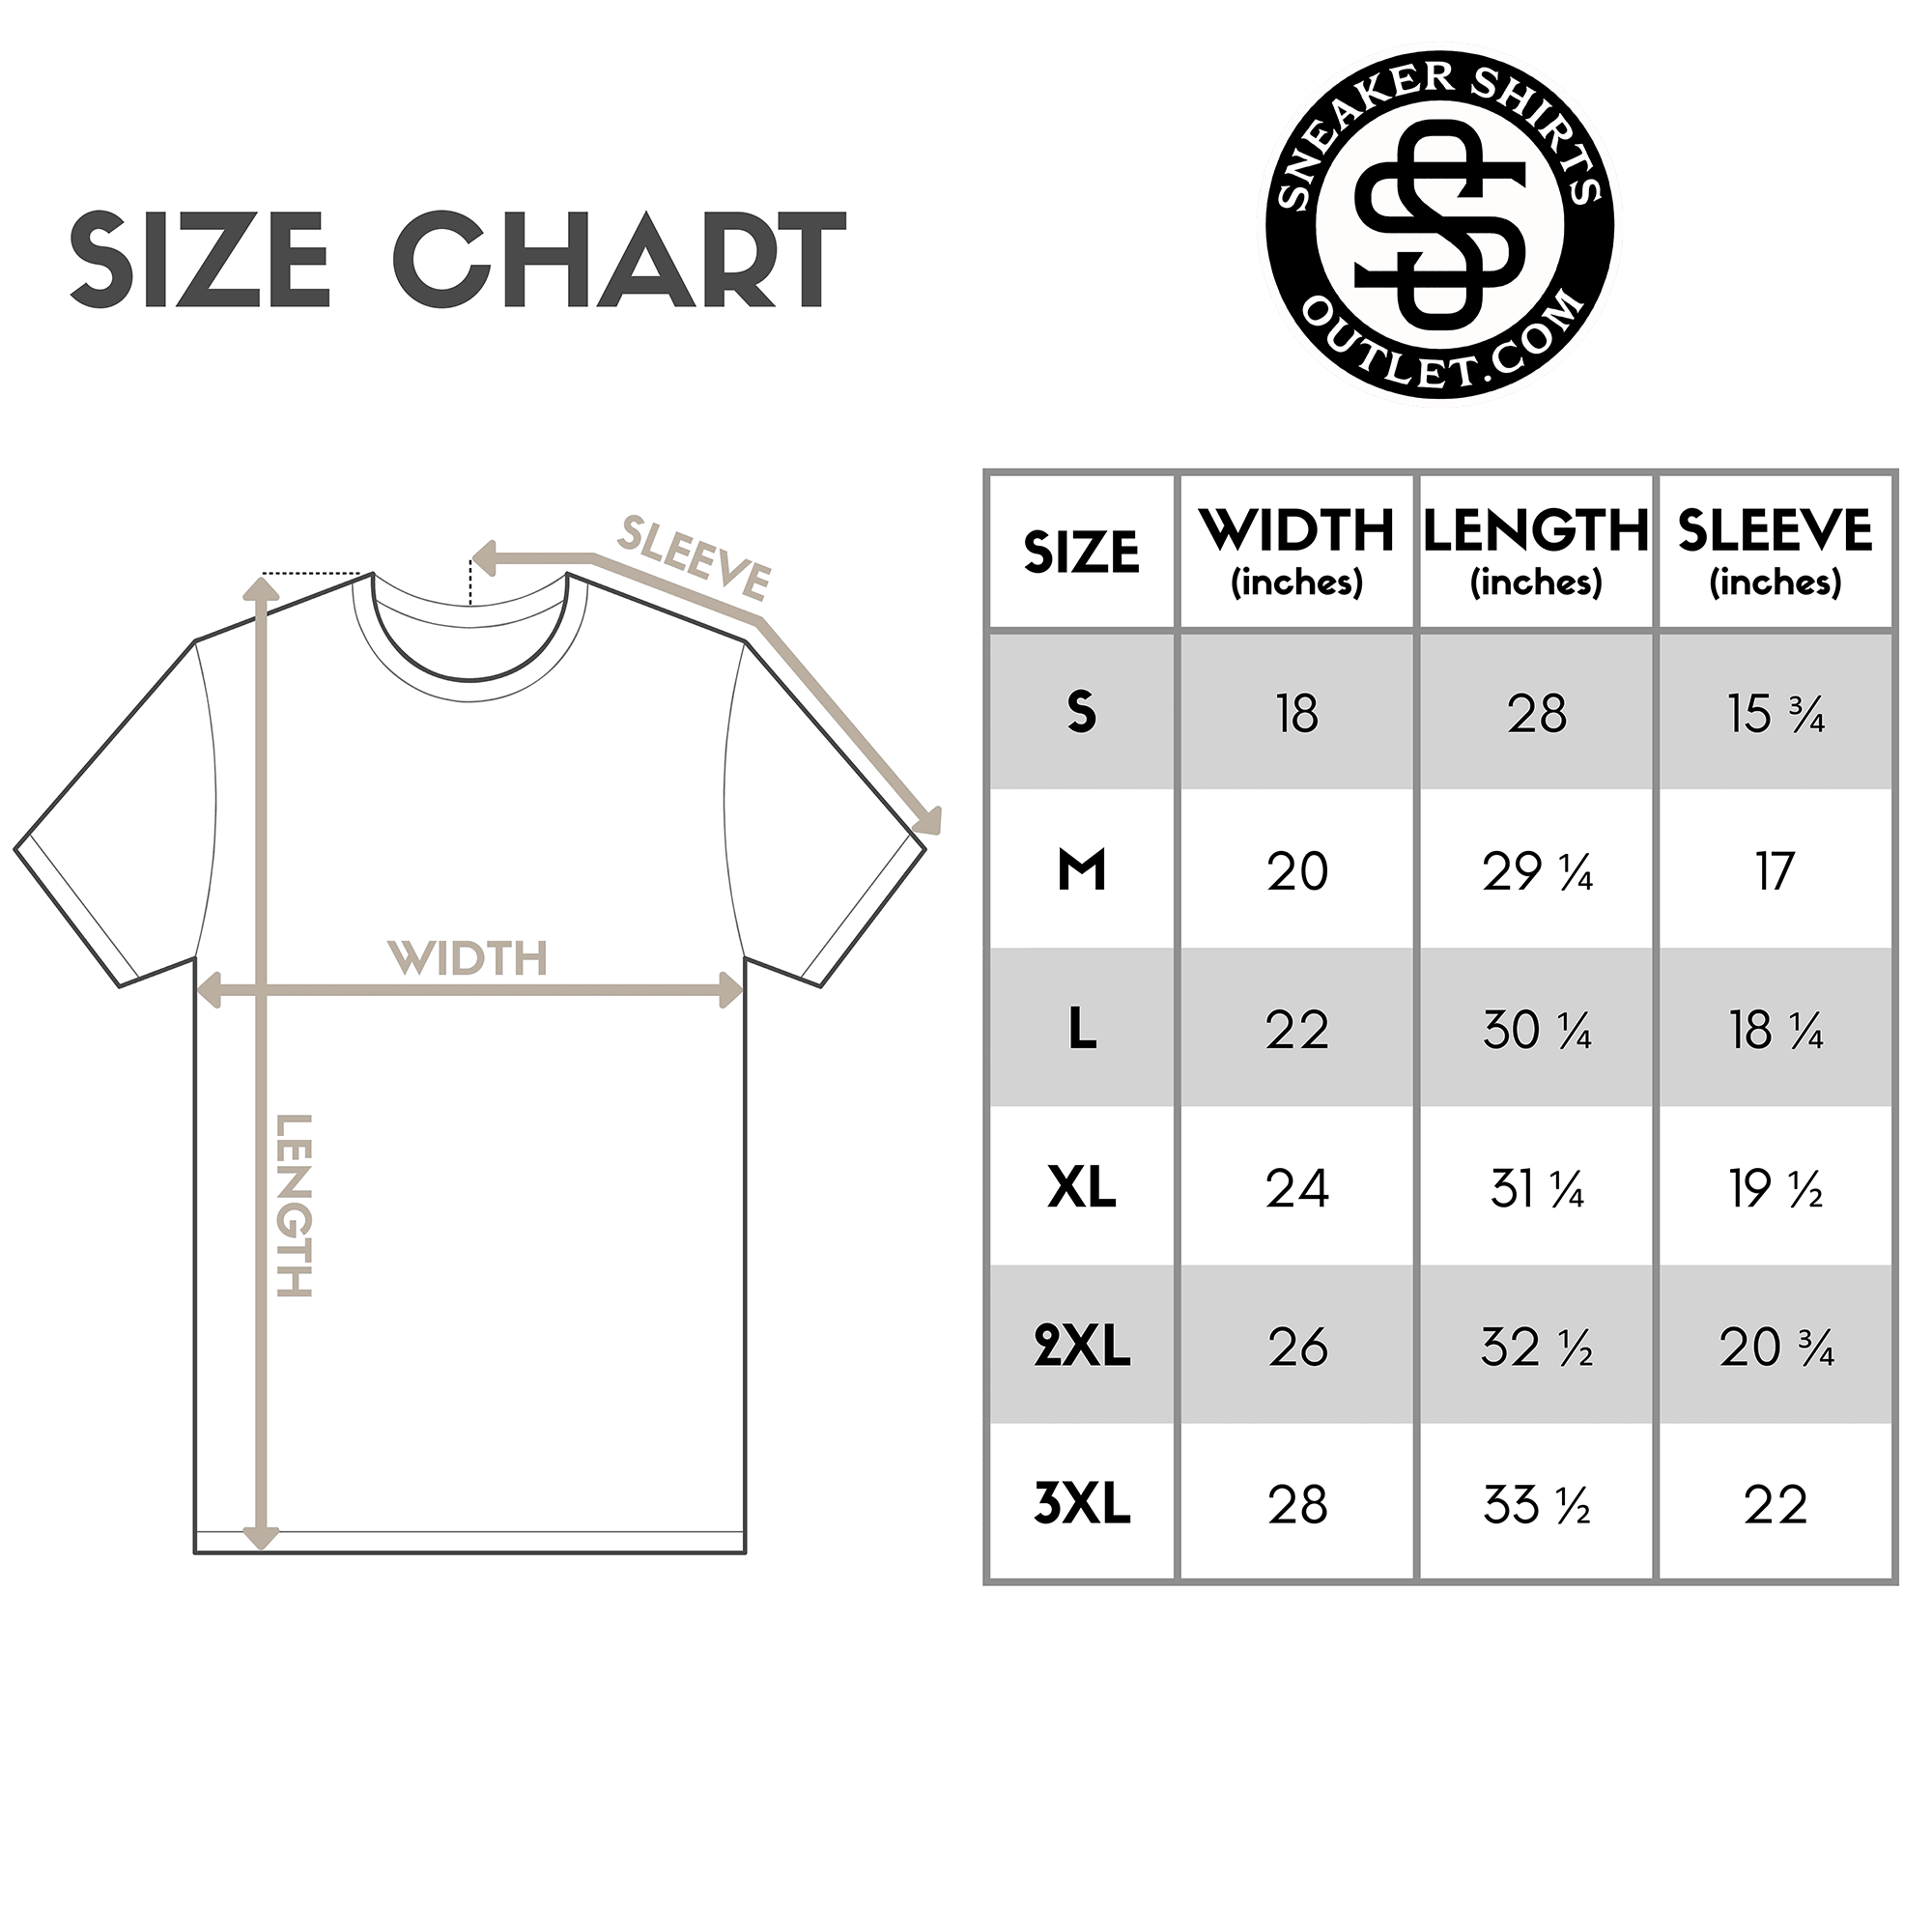 Savage Shirt Air Jordan 13s Retro Del Sol size chart photo